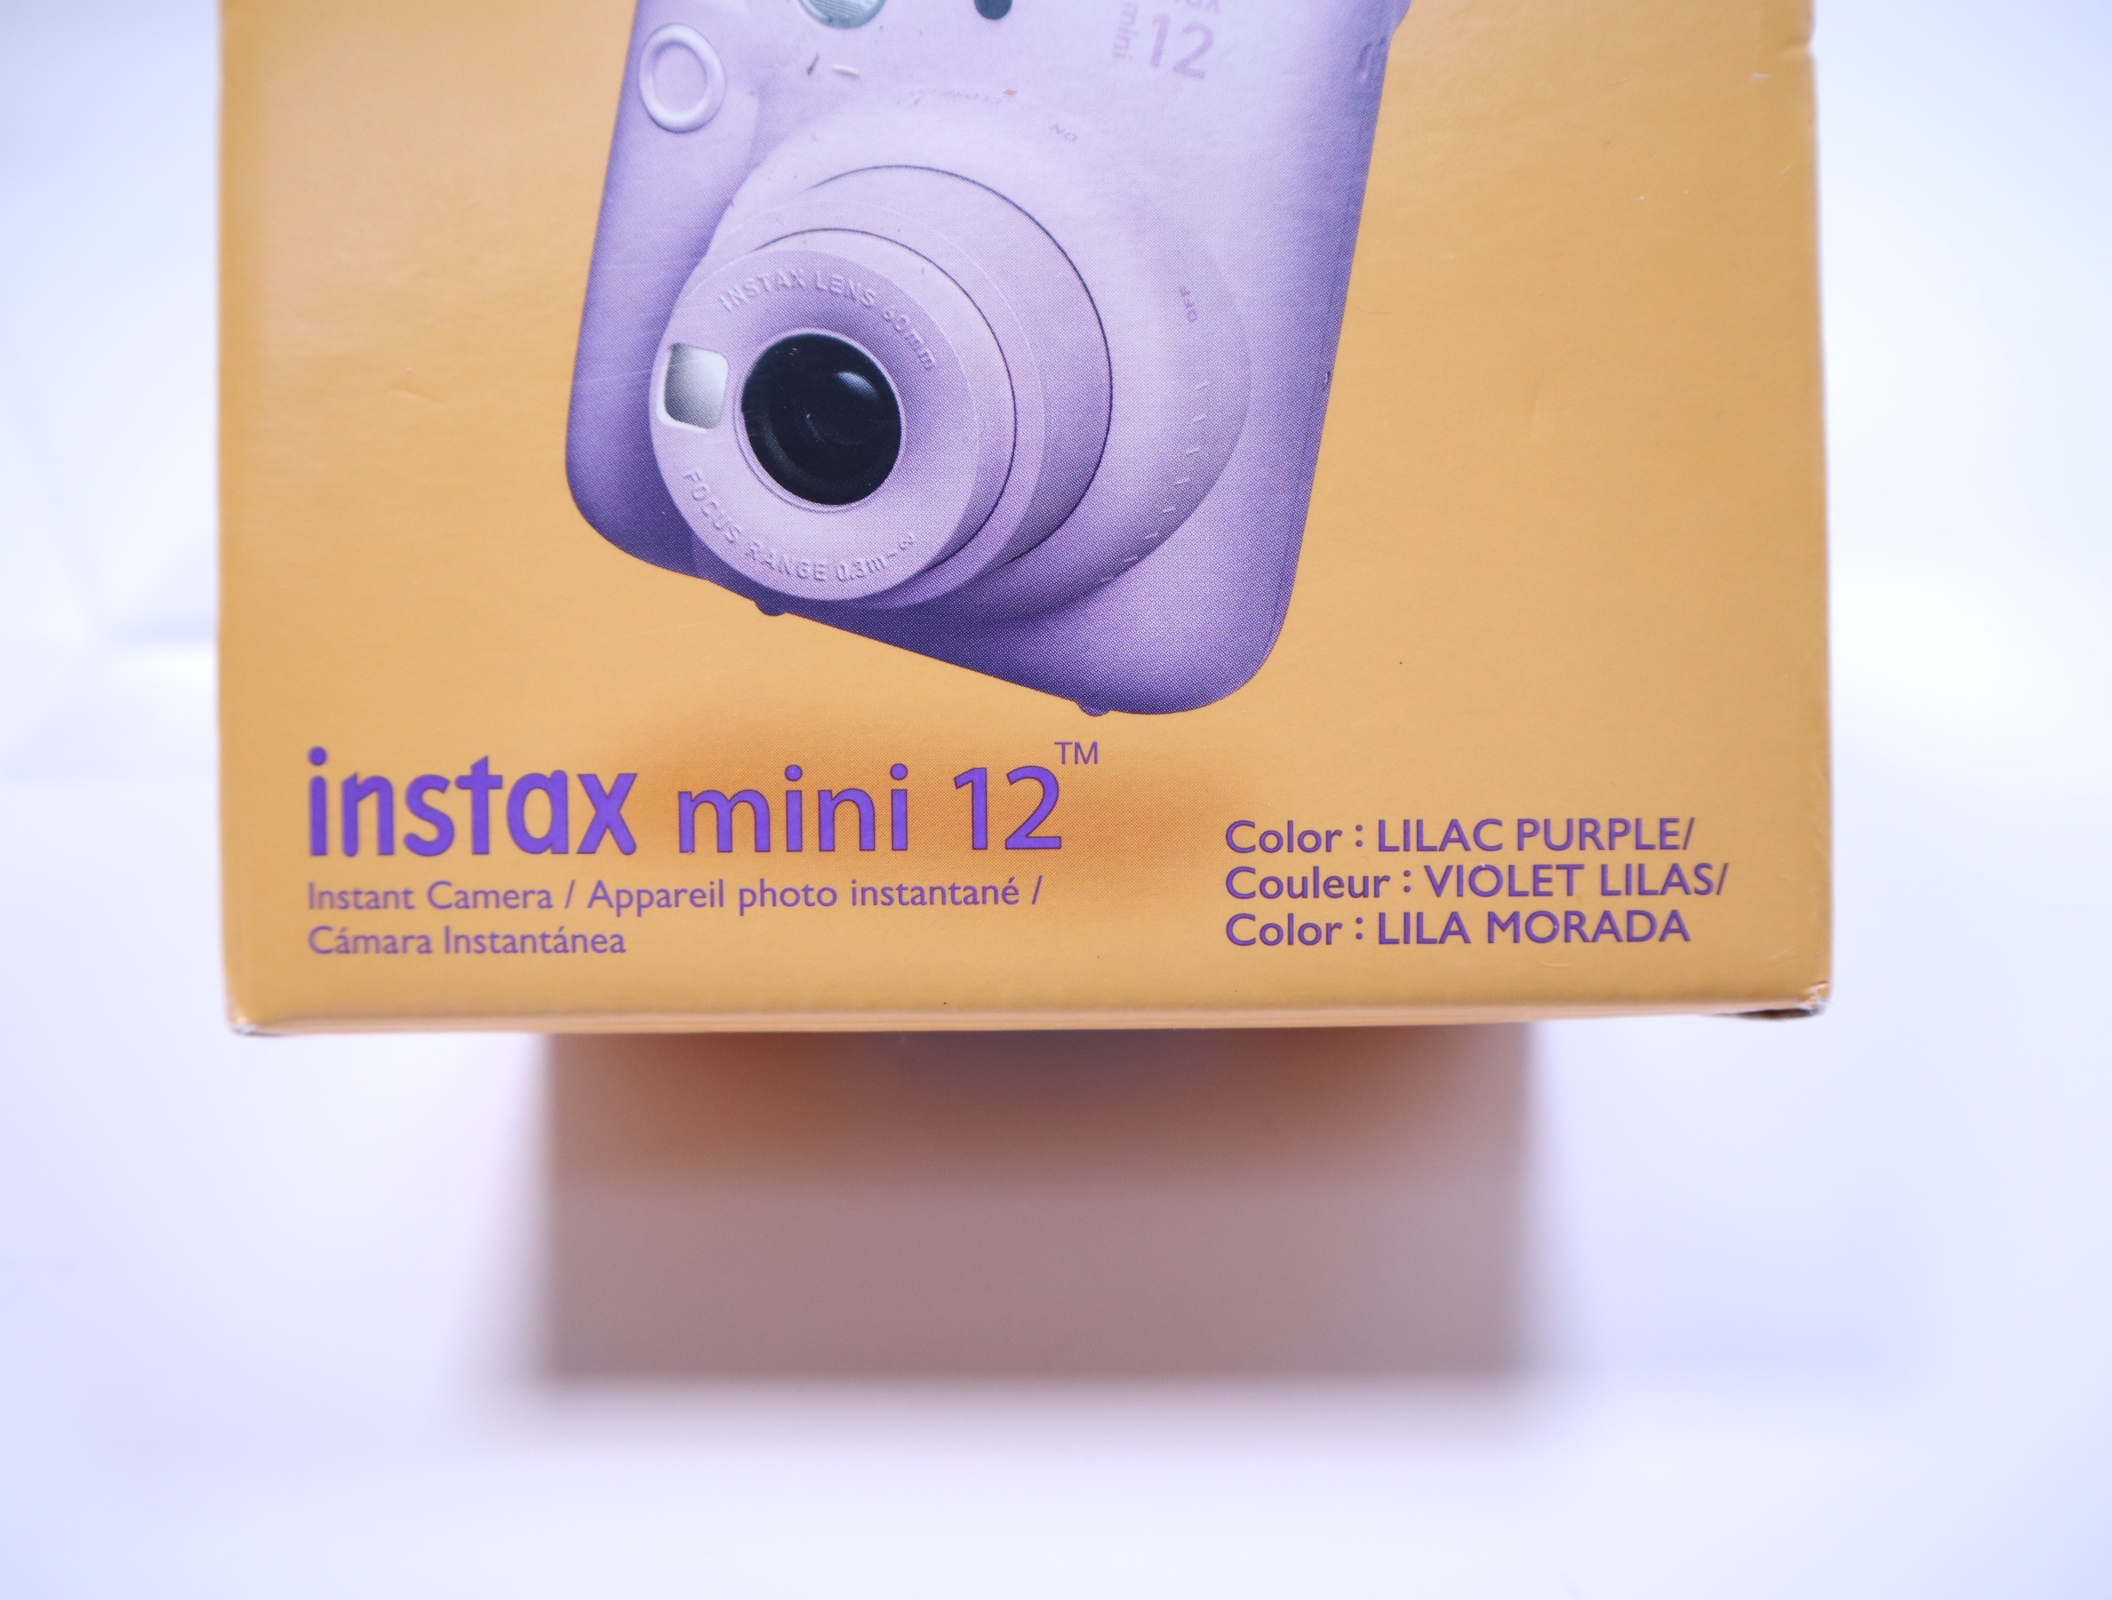 Cámara Instantánea Fujifilm Instax Mini 12